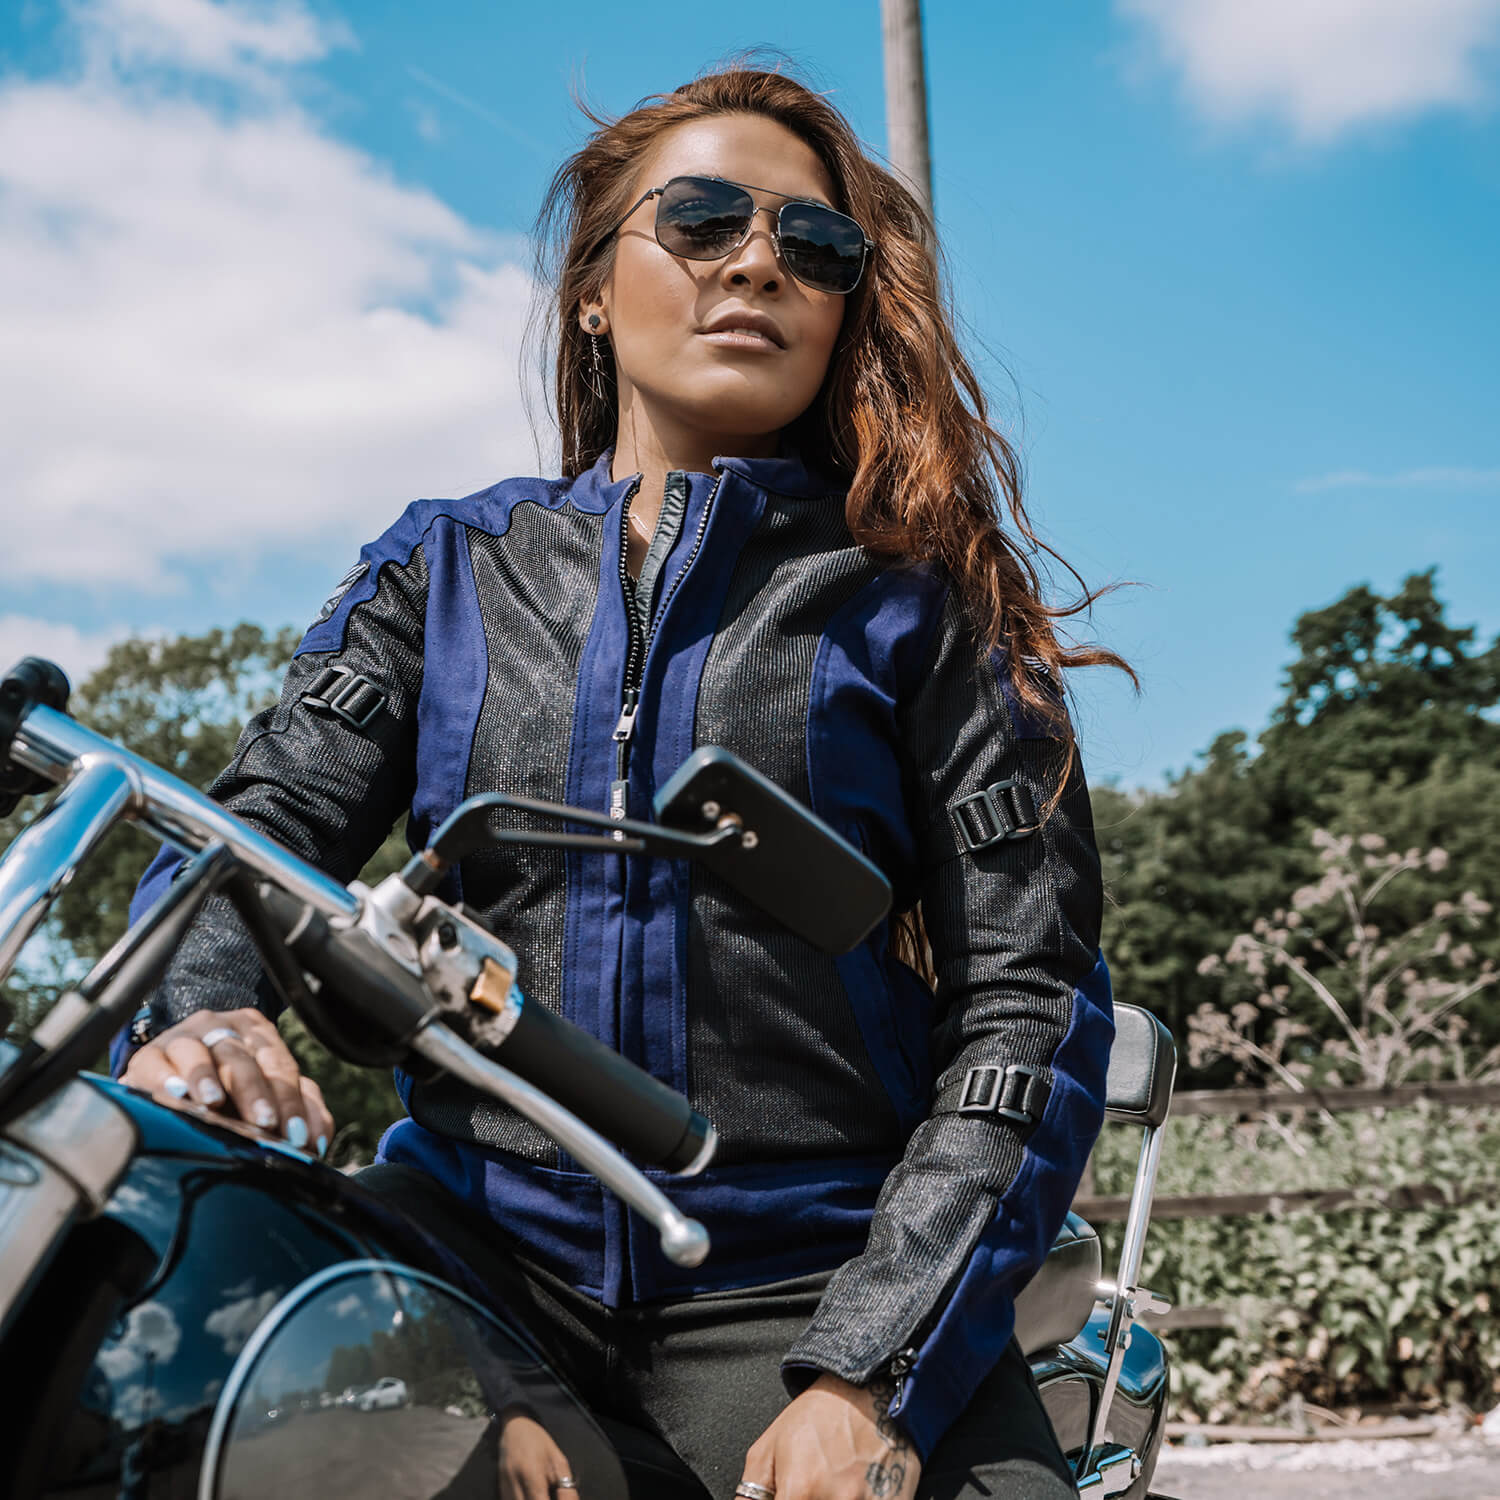 Discount Women's Motorcycle Gear